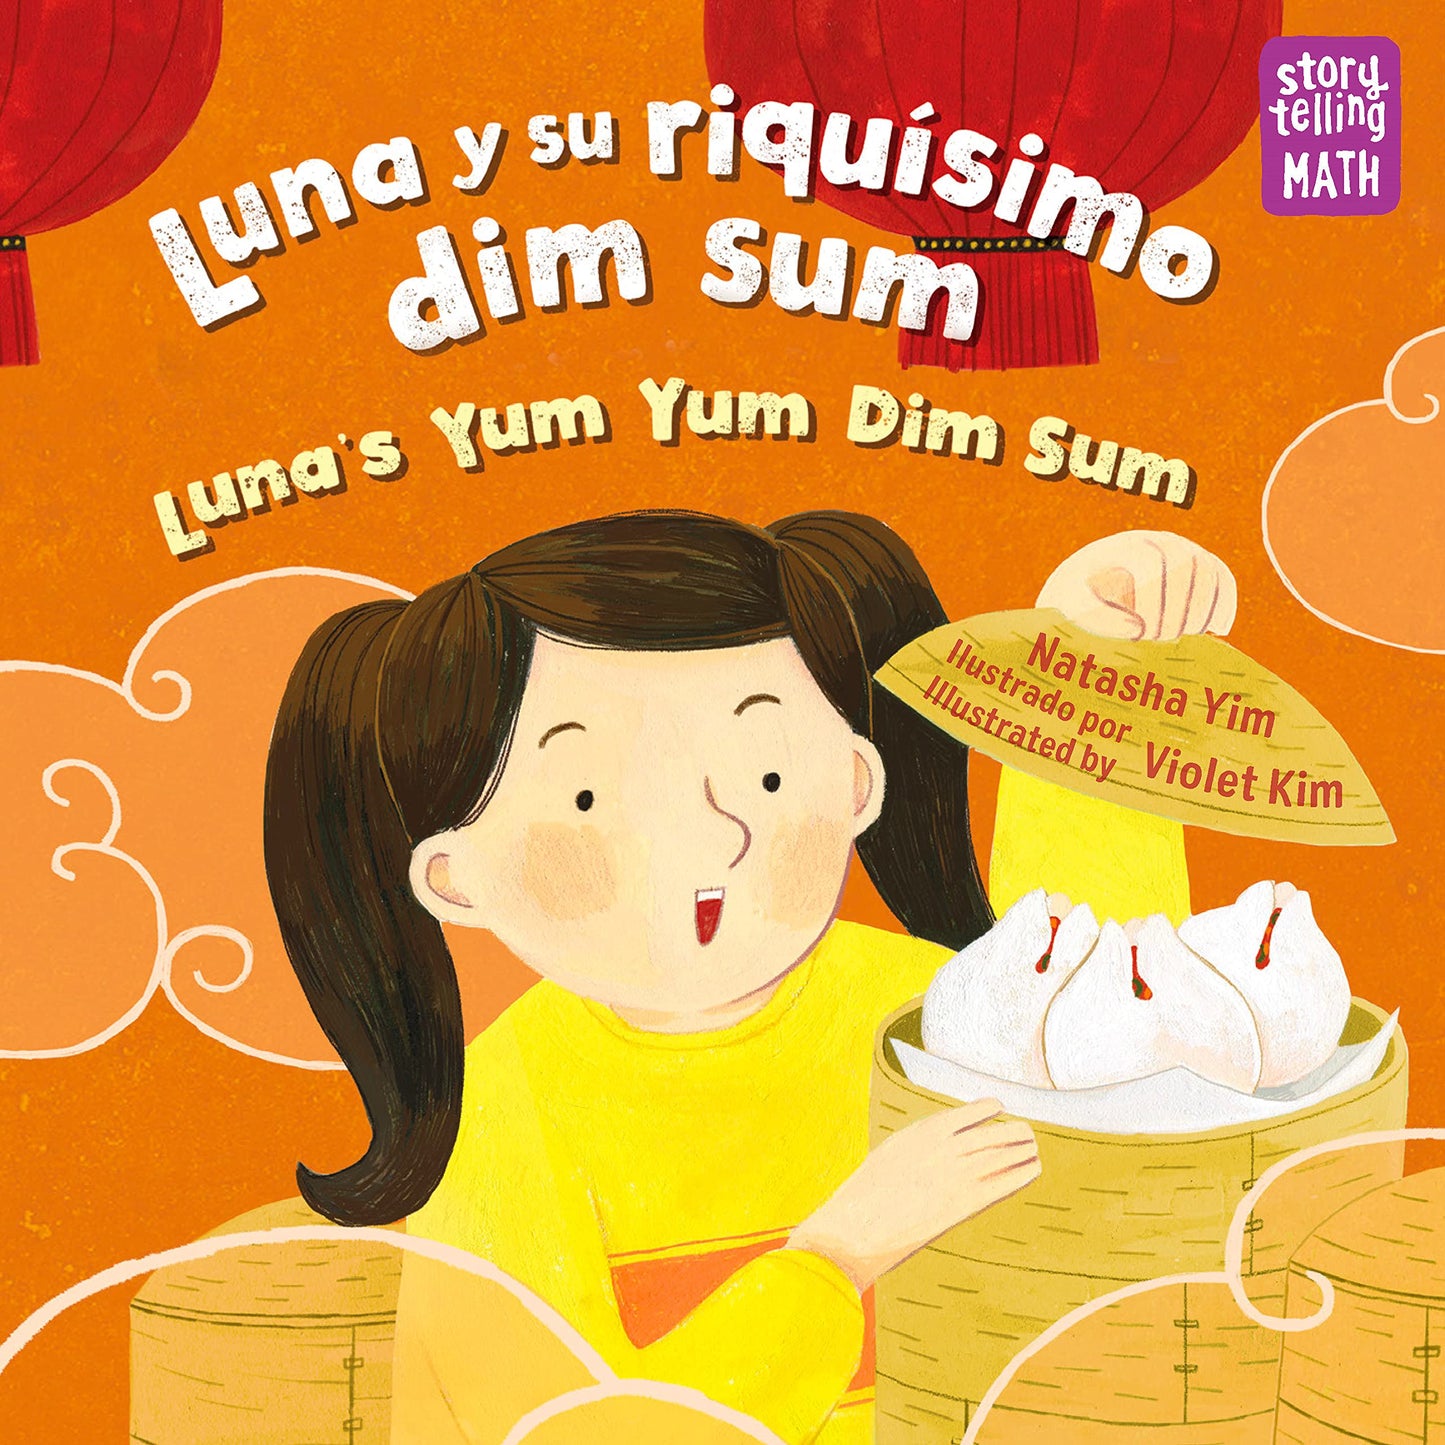 Luna y su riquísimo dim sum - Luna's Yum Yum Dim Sum